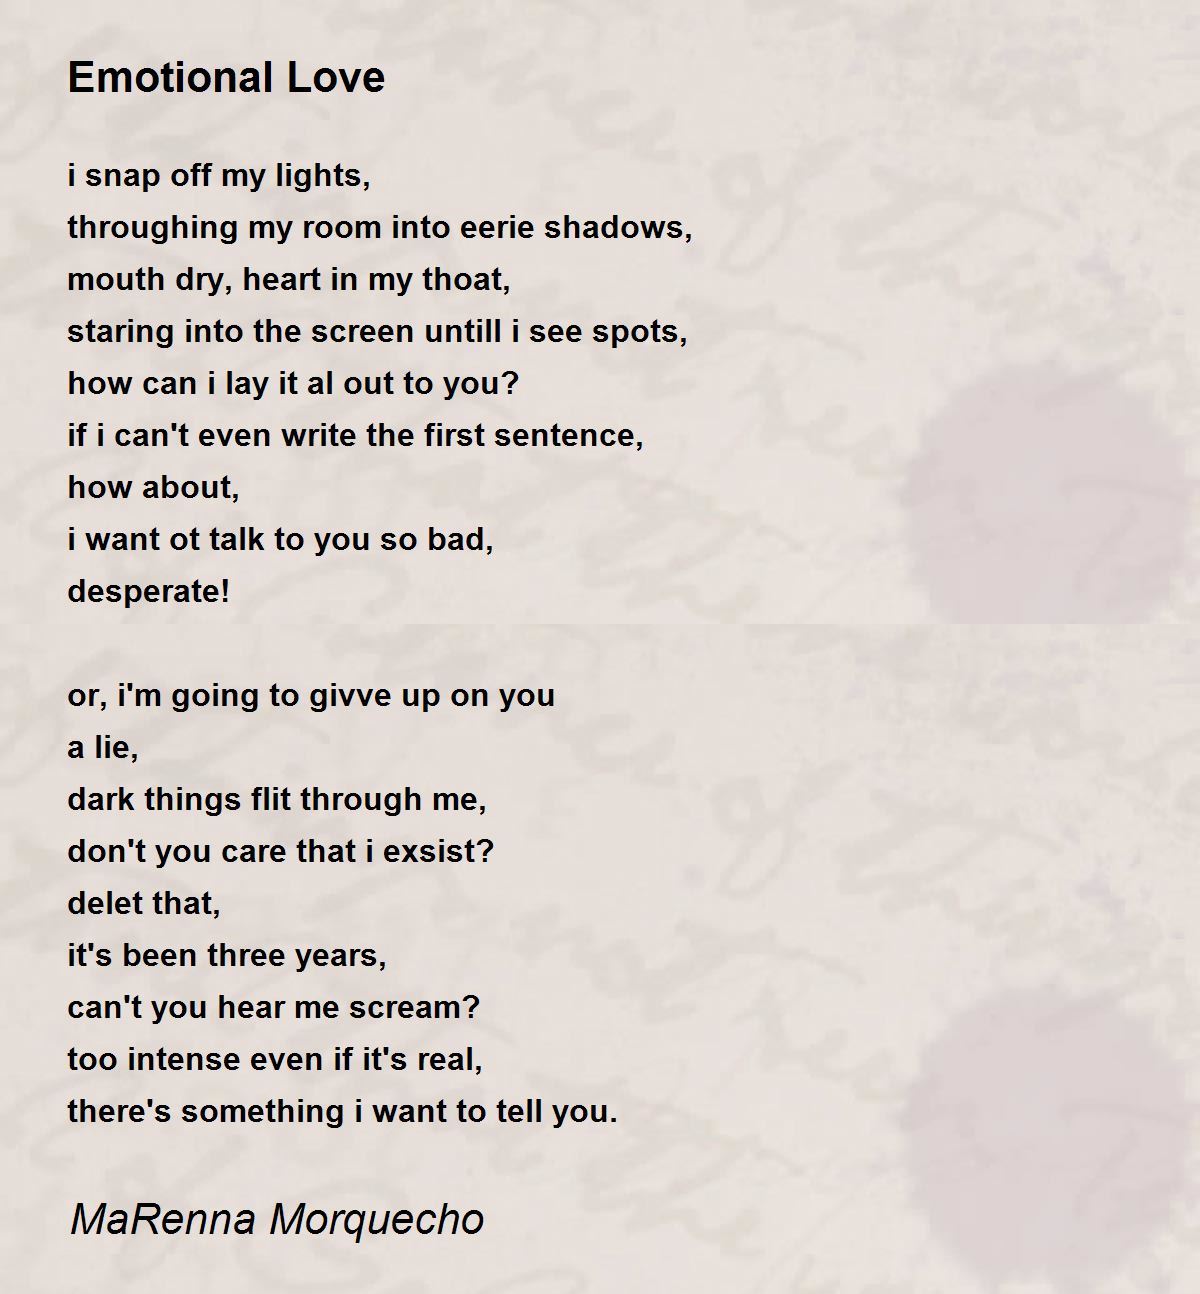 Emotional Love - Emotional Love Poem by MaRenna Morquecho